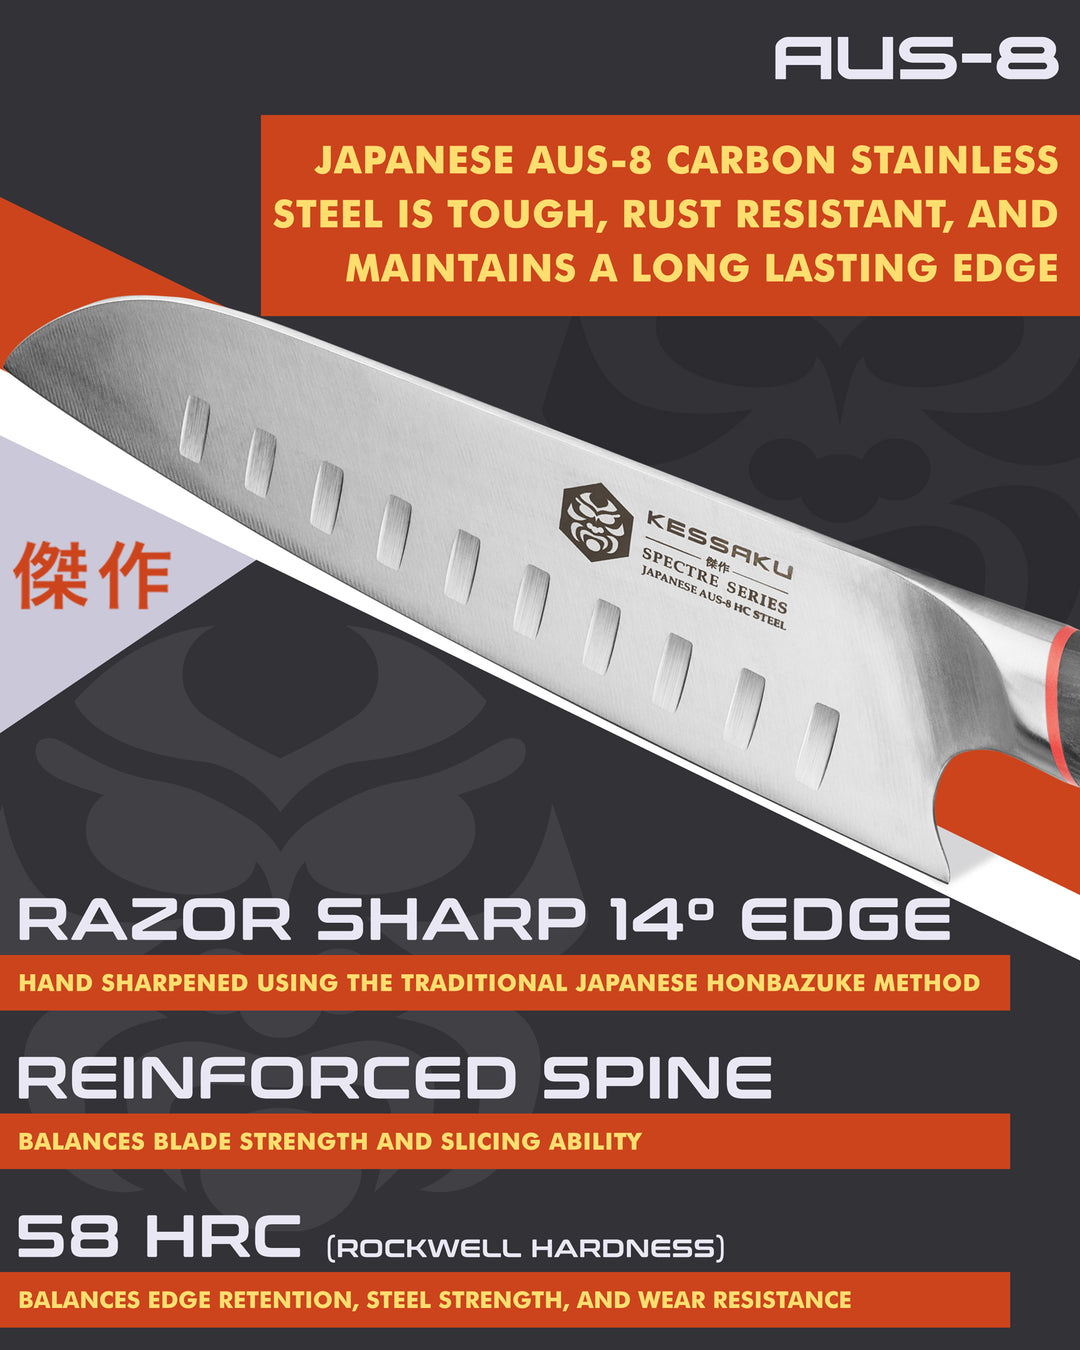 Kessaku Spectre Santoku Knife blade features: AUS-8 steel, 58 HRC, 14 degree edge, reinforced spine